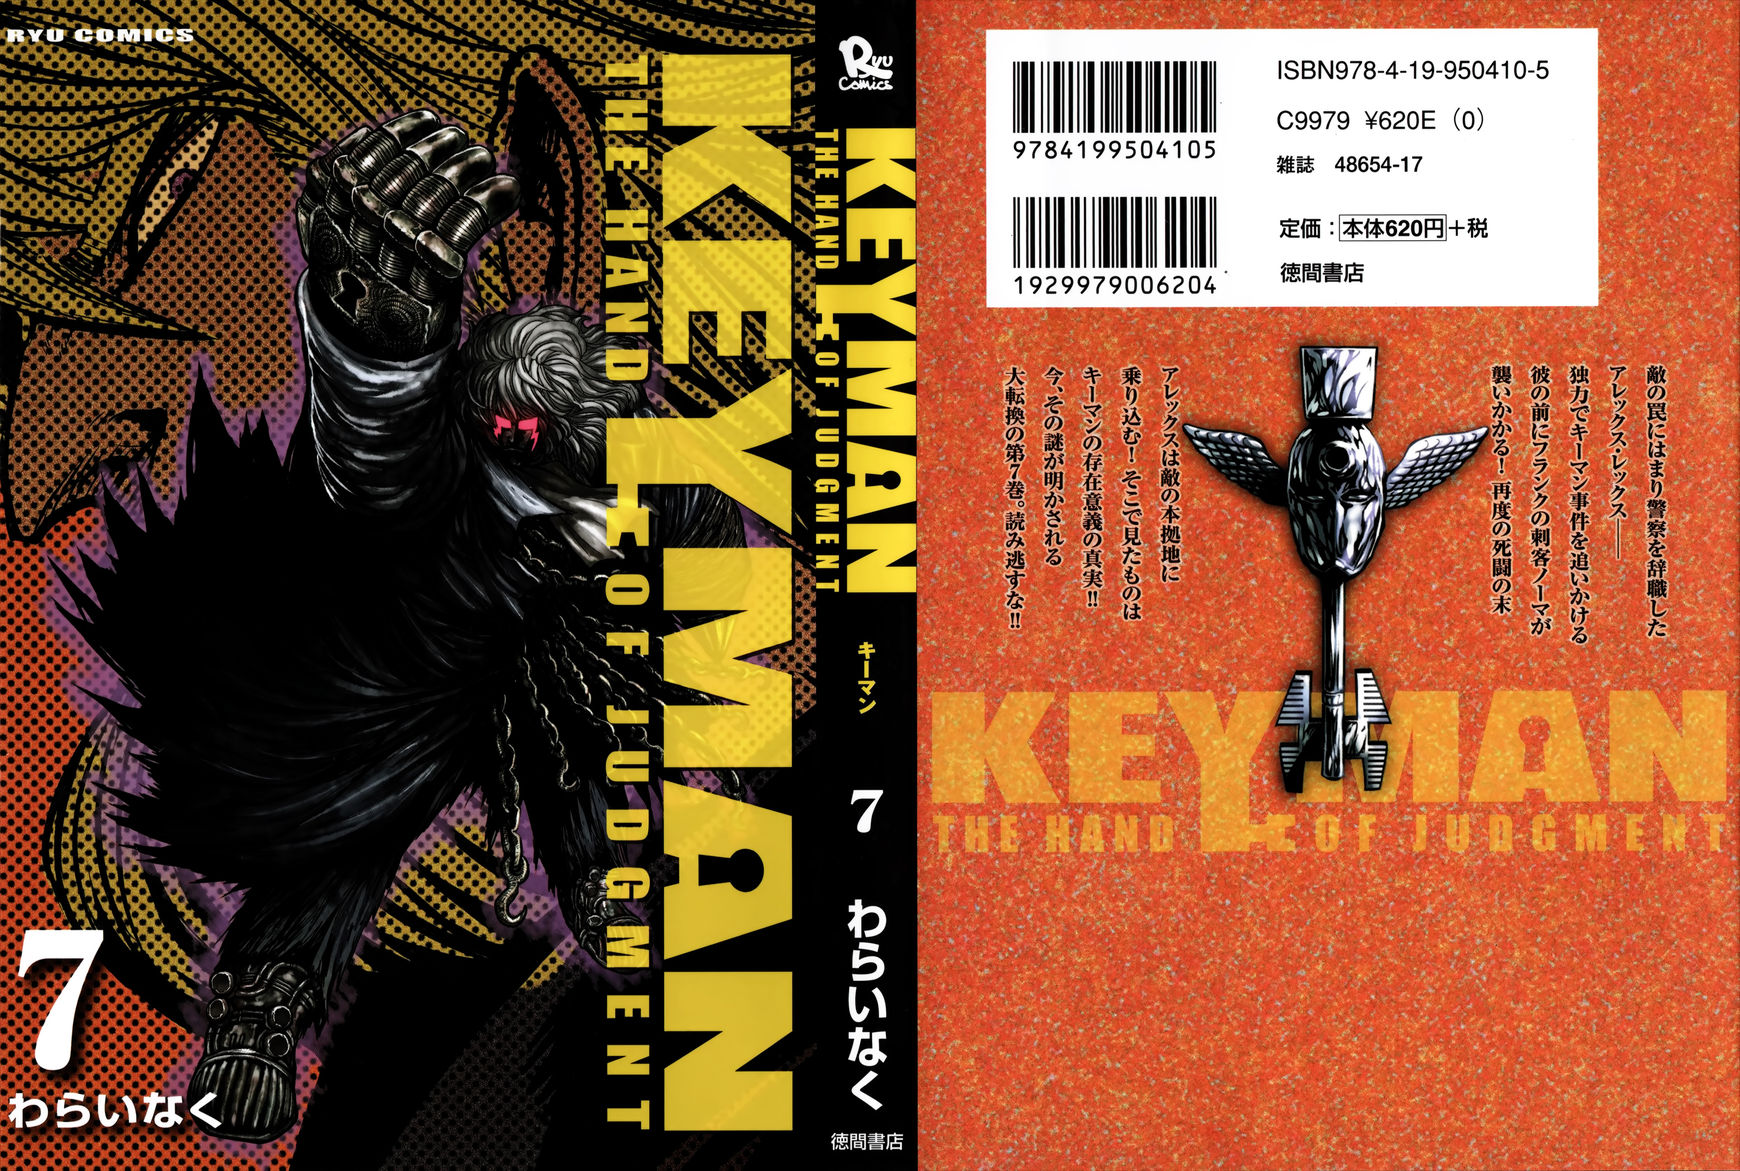 Keyman: The Hand of Judgement 30